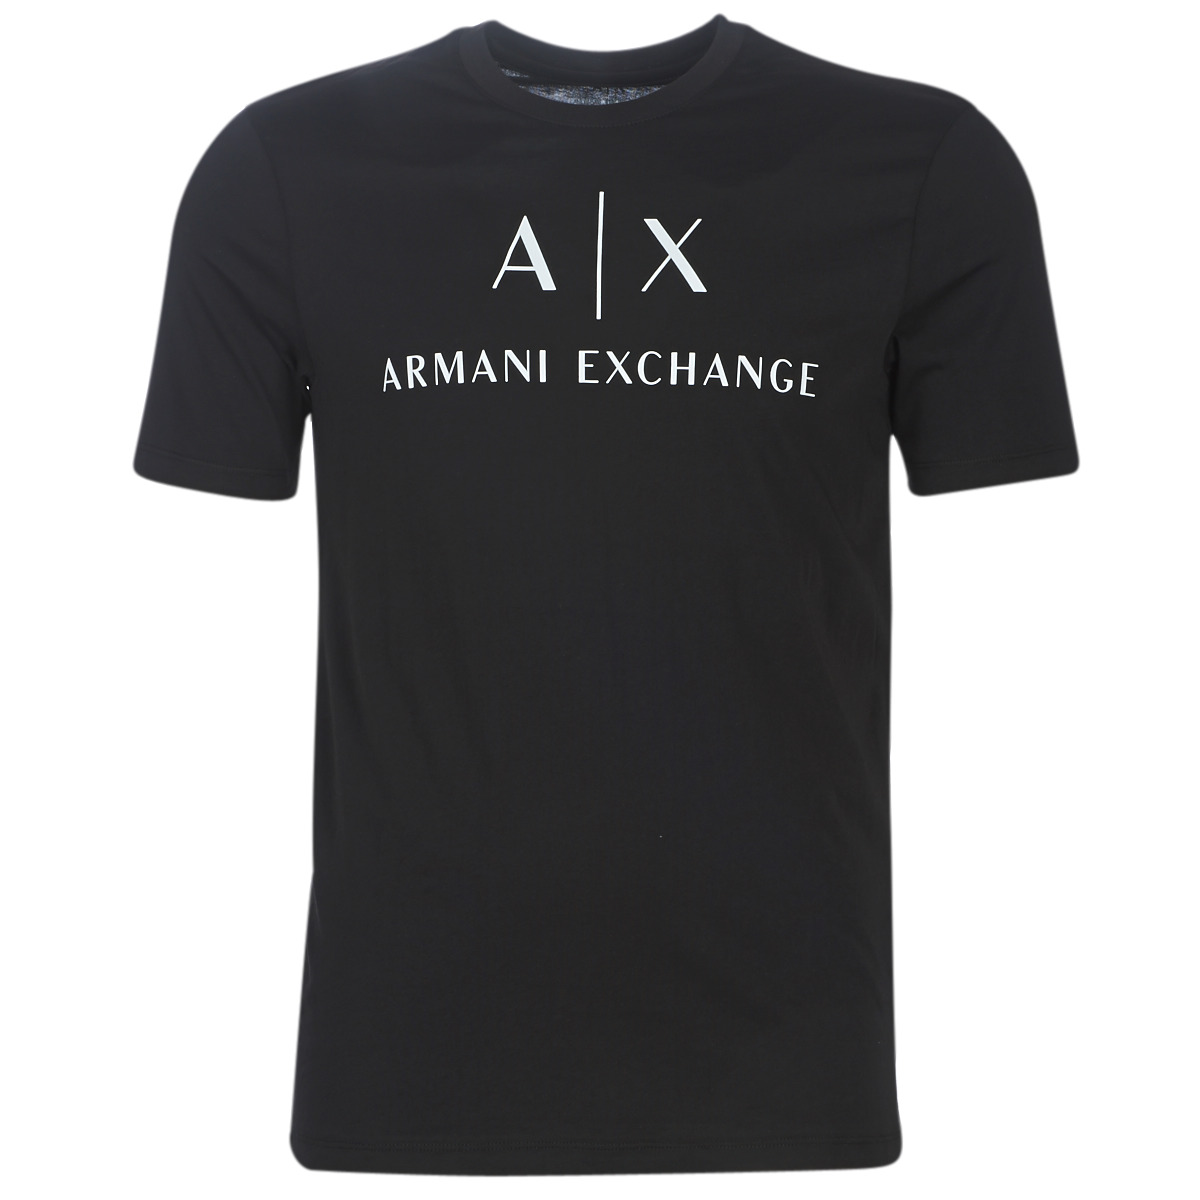 armani exchange site